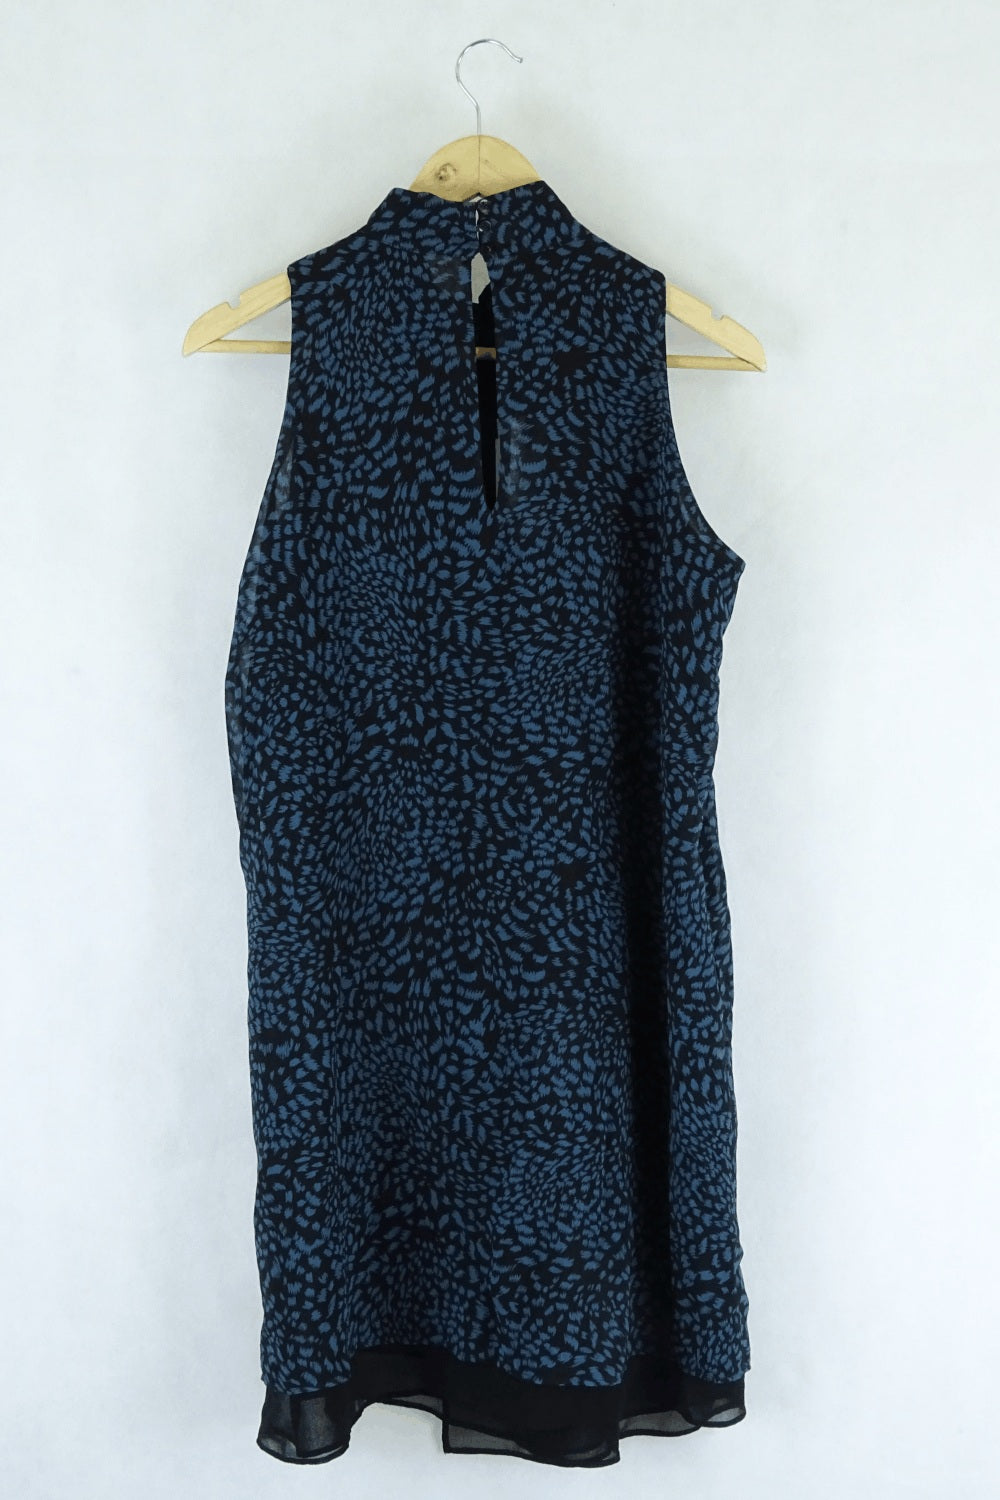 Lipsy London Blue and Black Lace Dress S - Reluv Clothing Australia